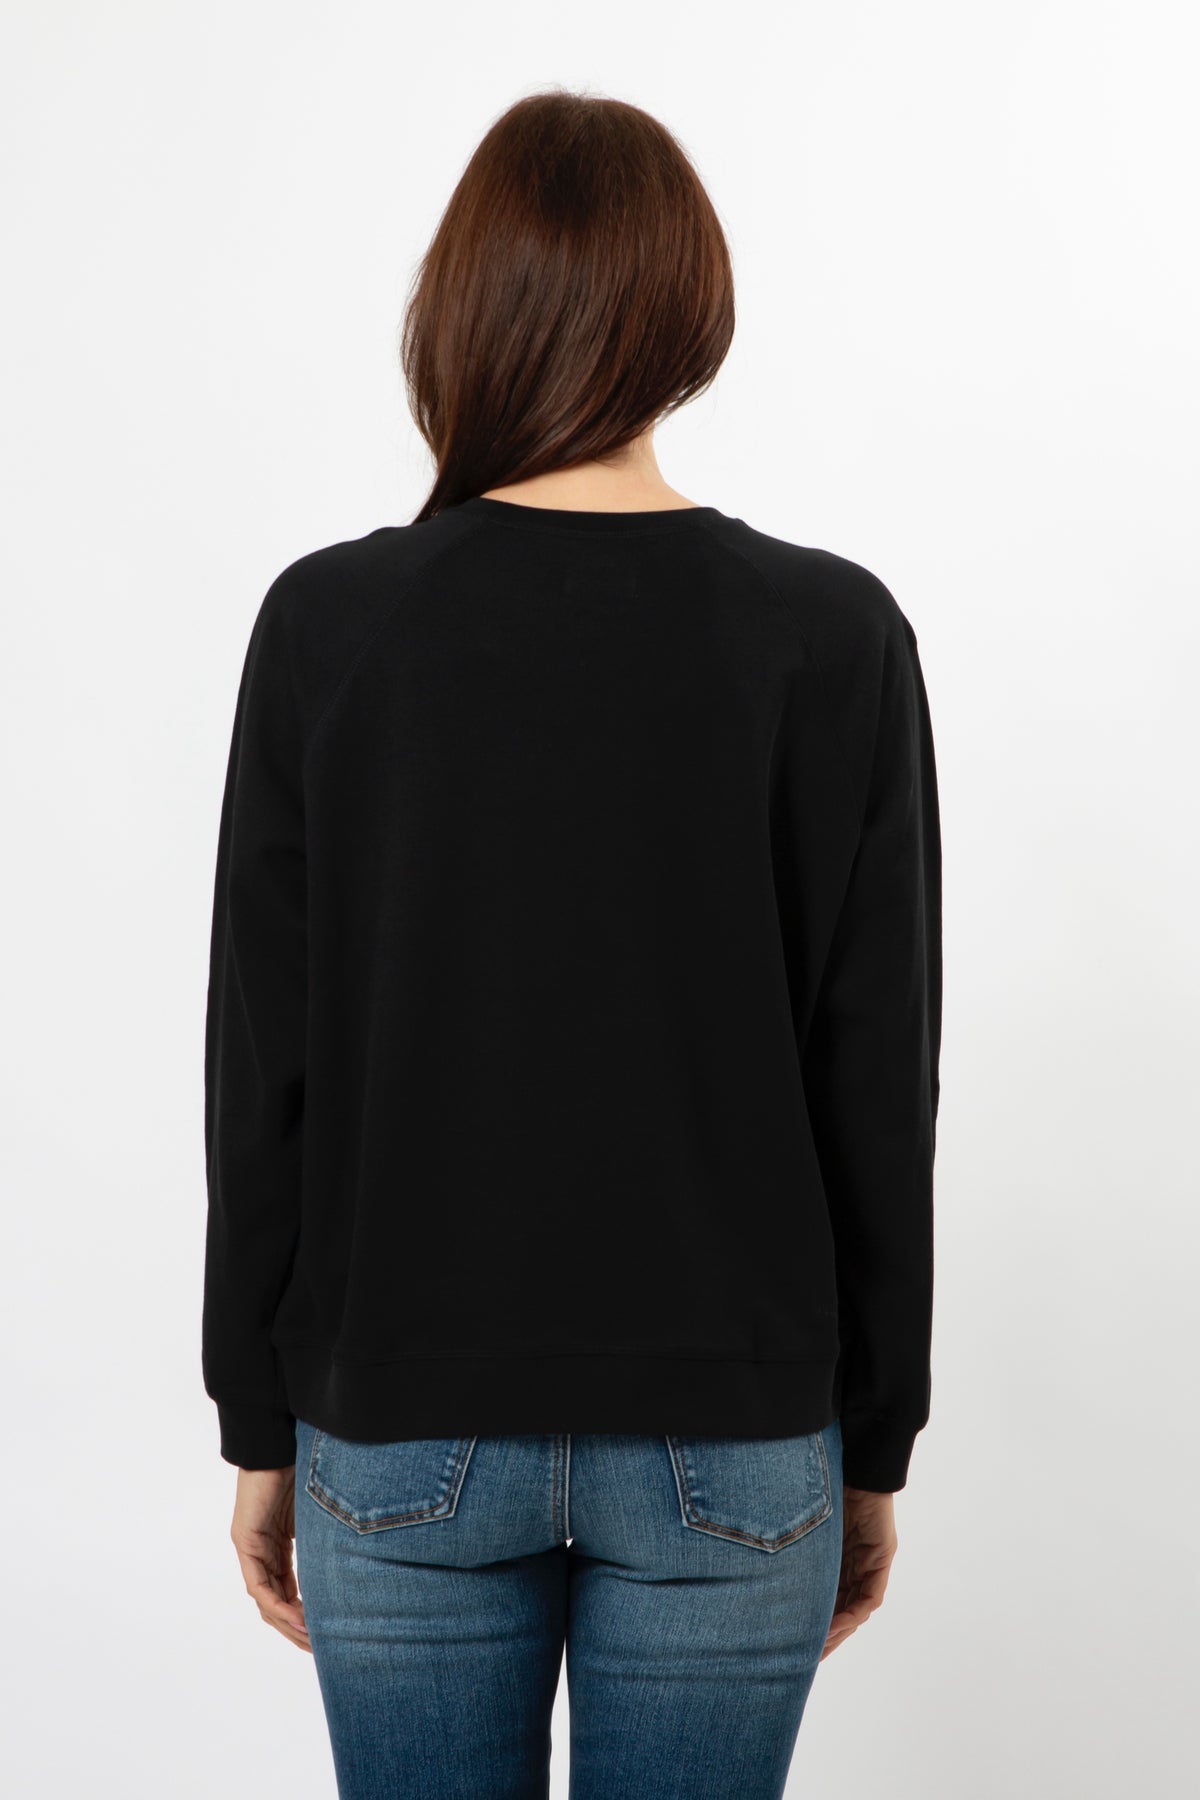 Sunday Sweater Black Licorice Allsorts